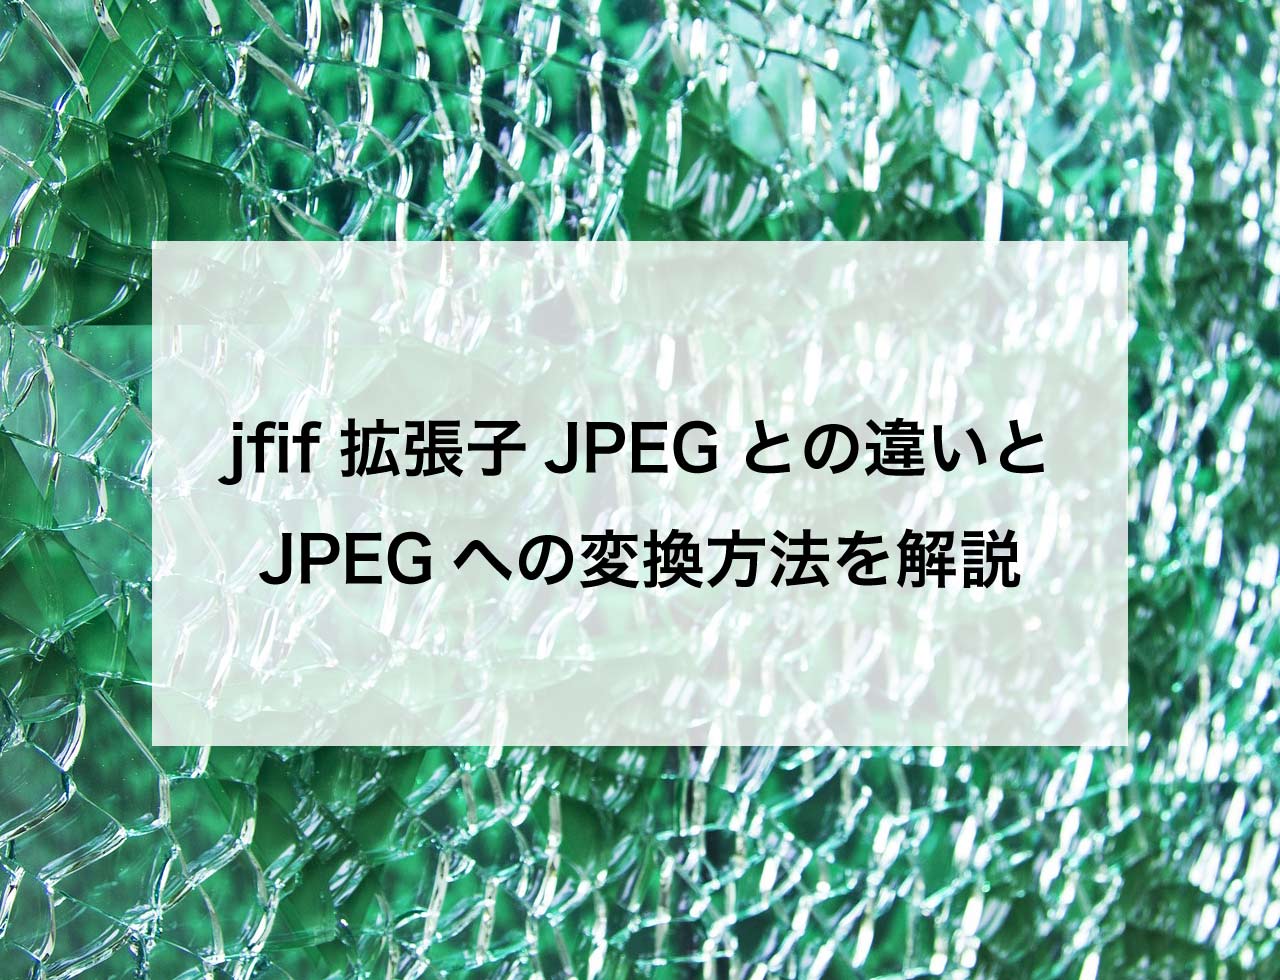 jfif拡張子JPEGとの違いとJPEGへの変換方法を解説